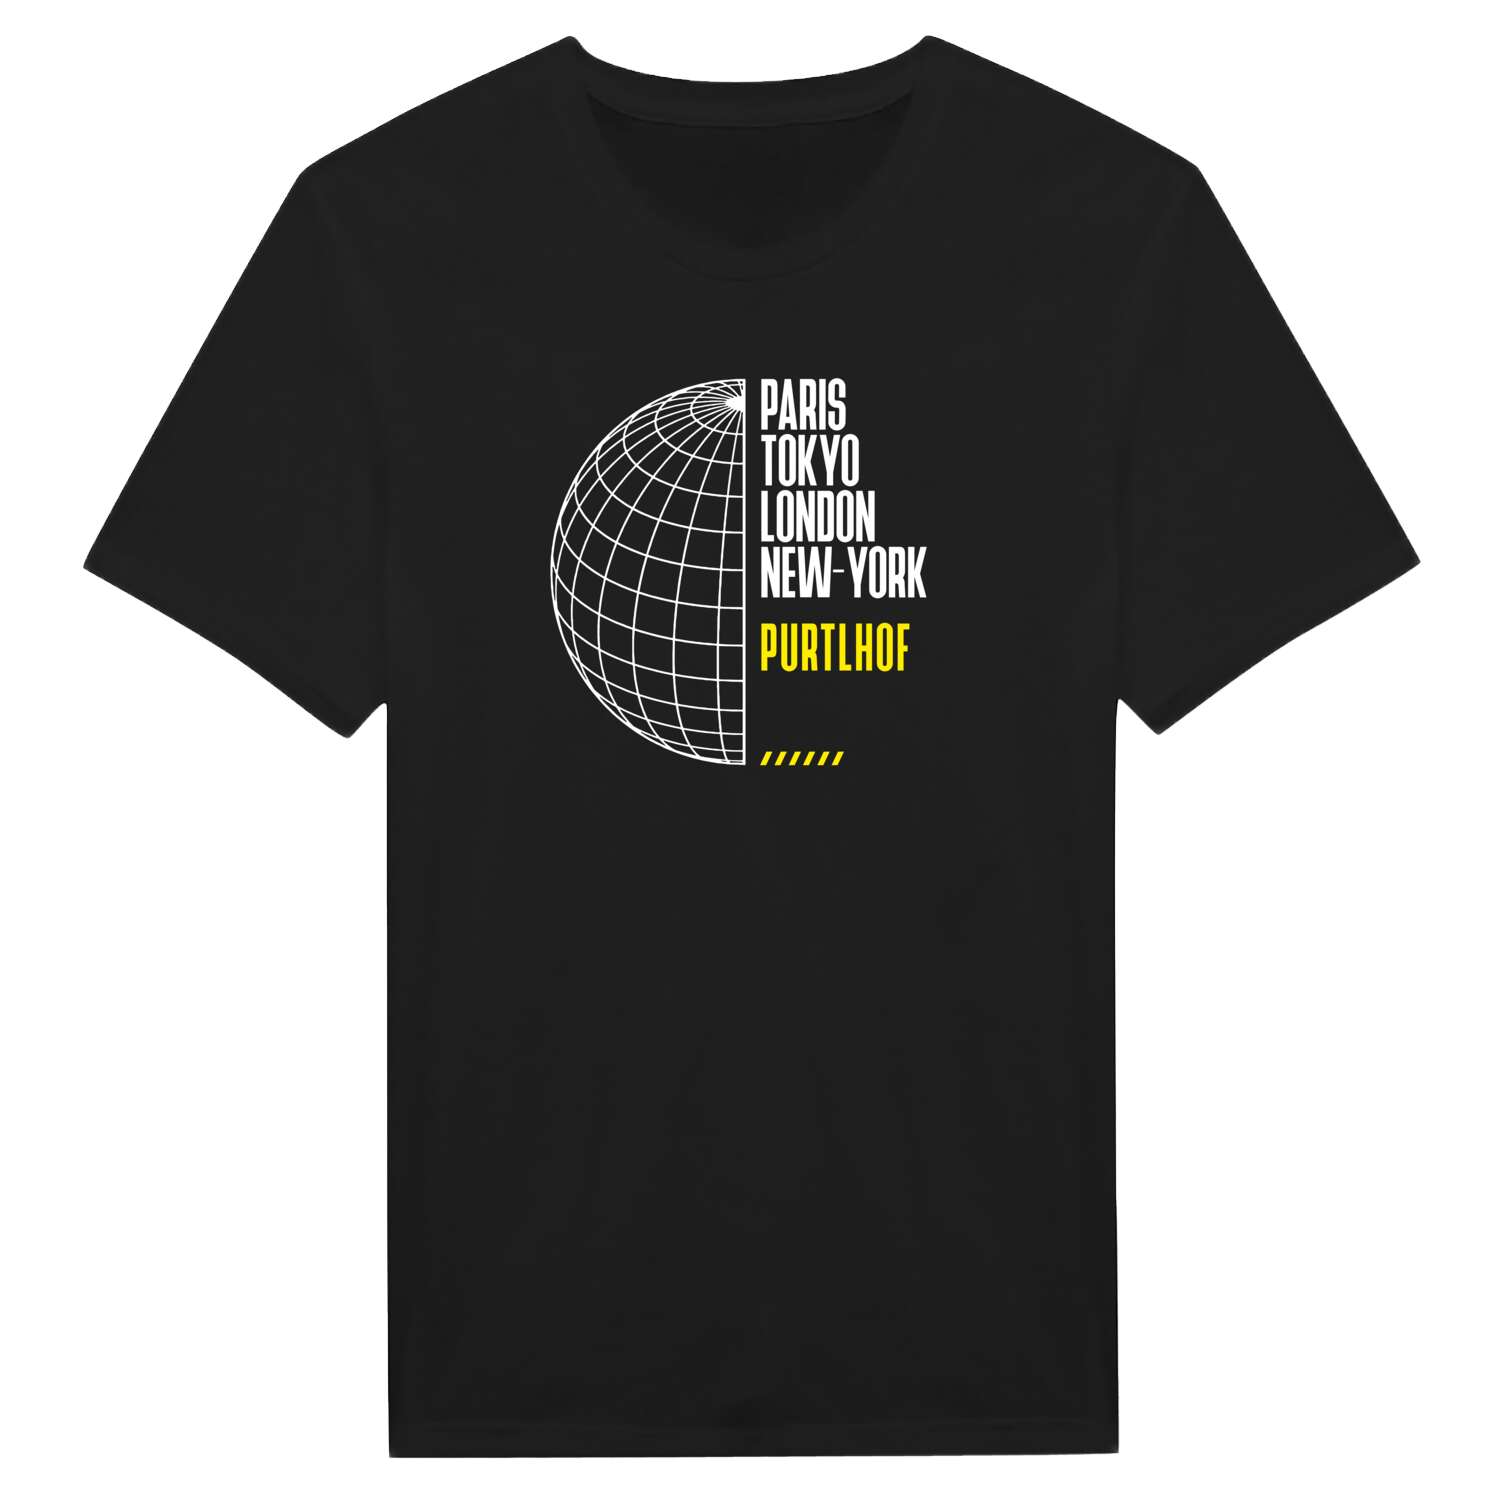 Purtlhof T-Shirt »Paris Tokyo London«